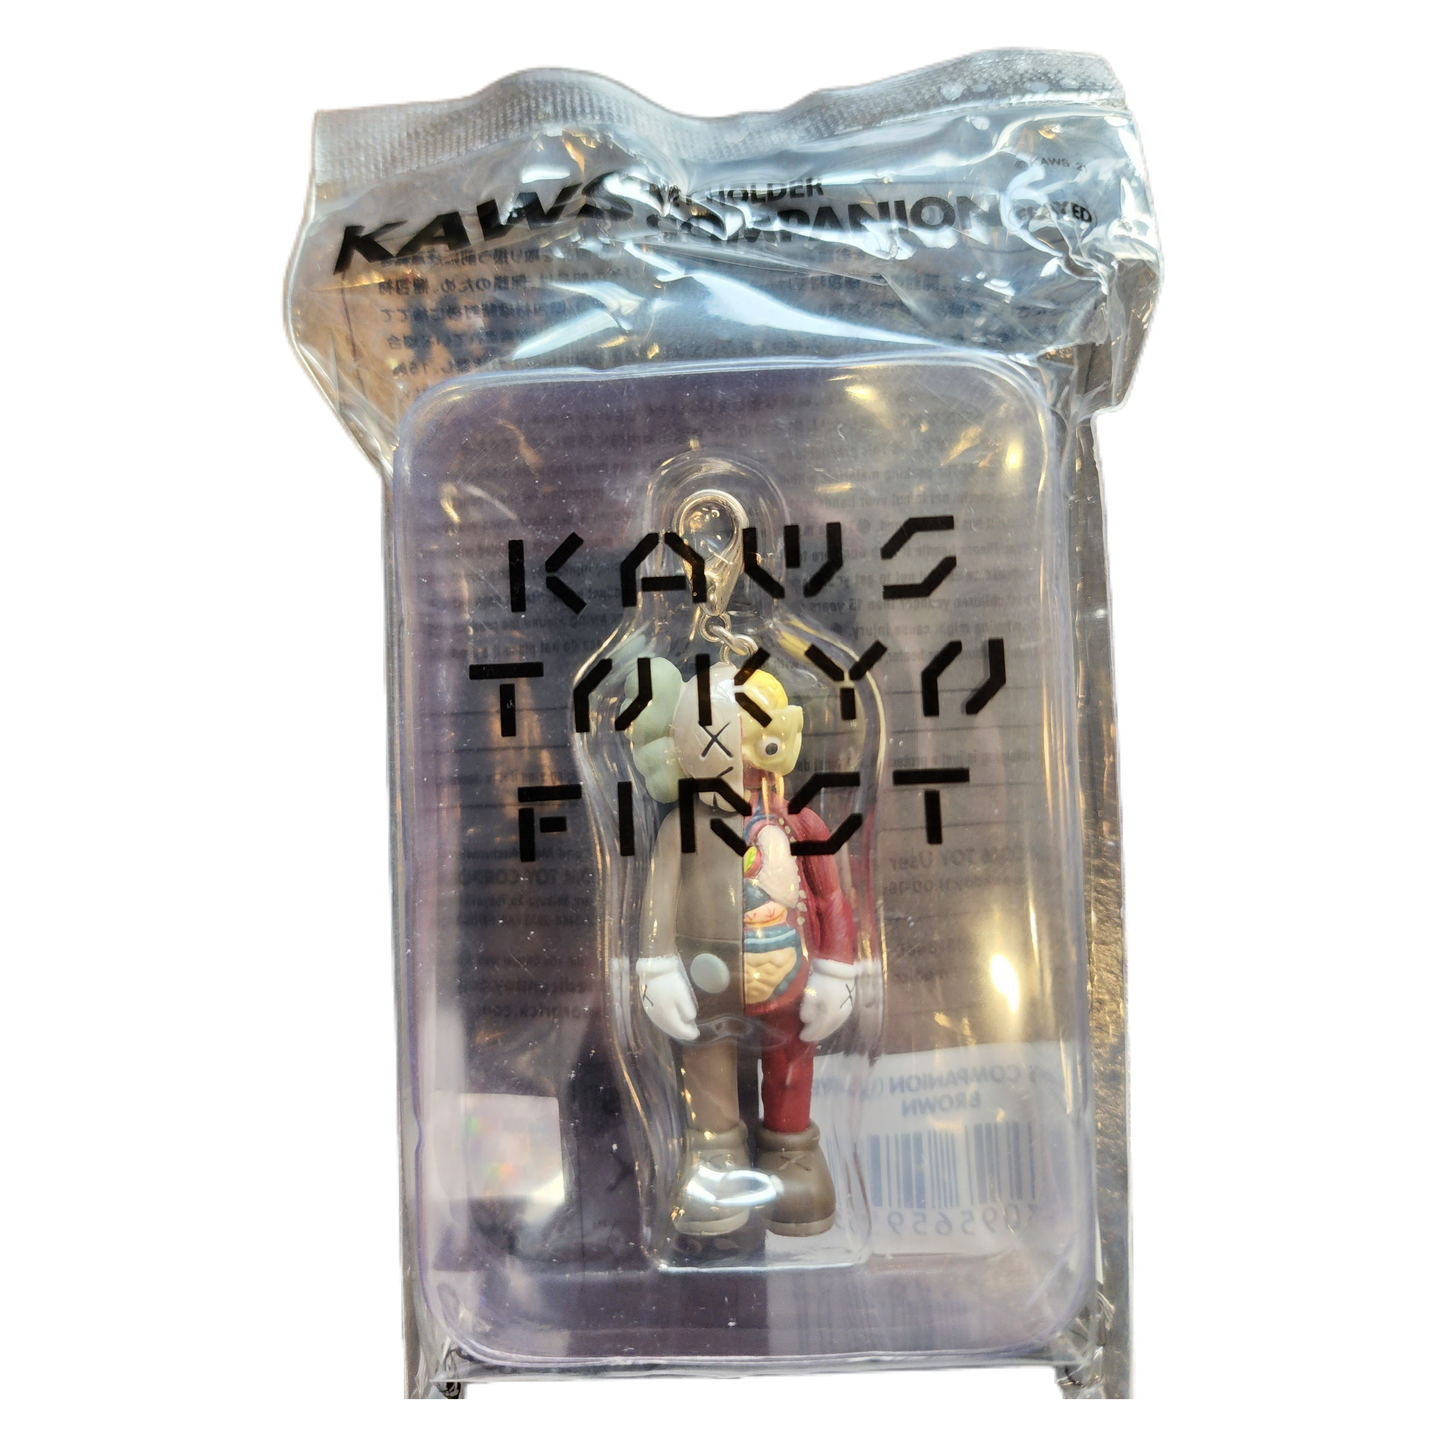 Kaws - "Tokyo First Flayed" - Keychain